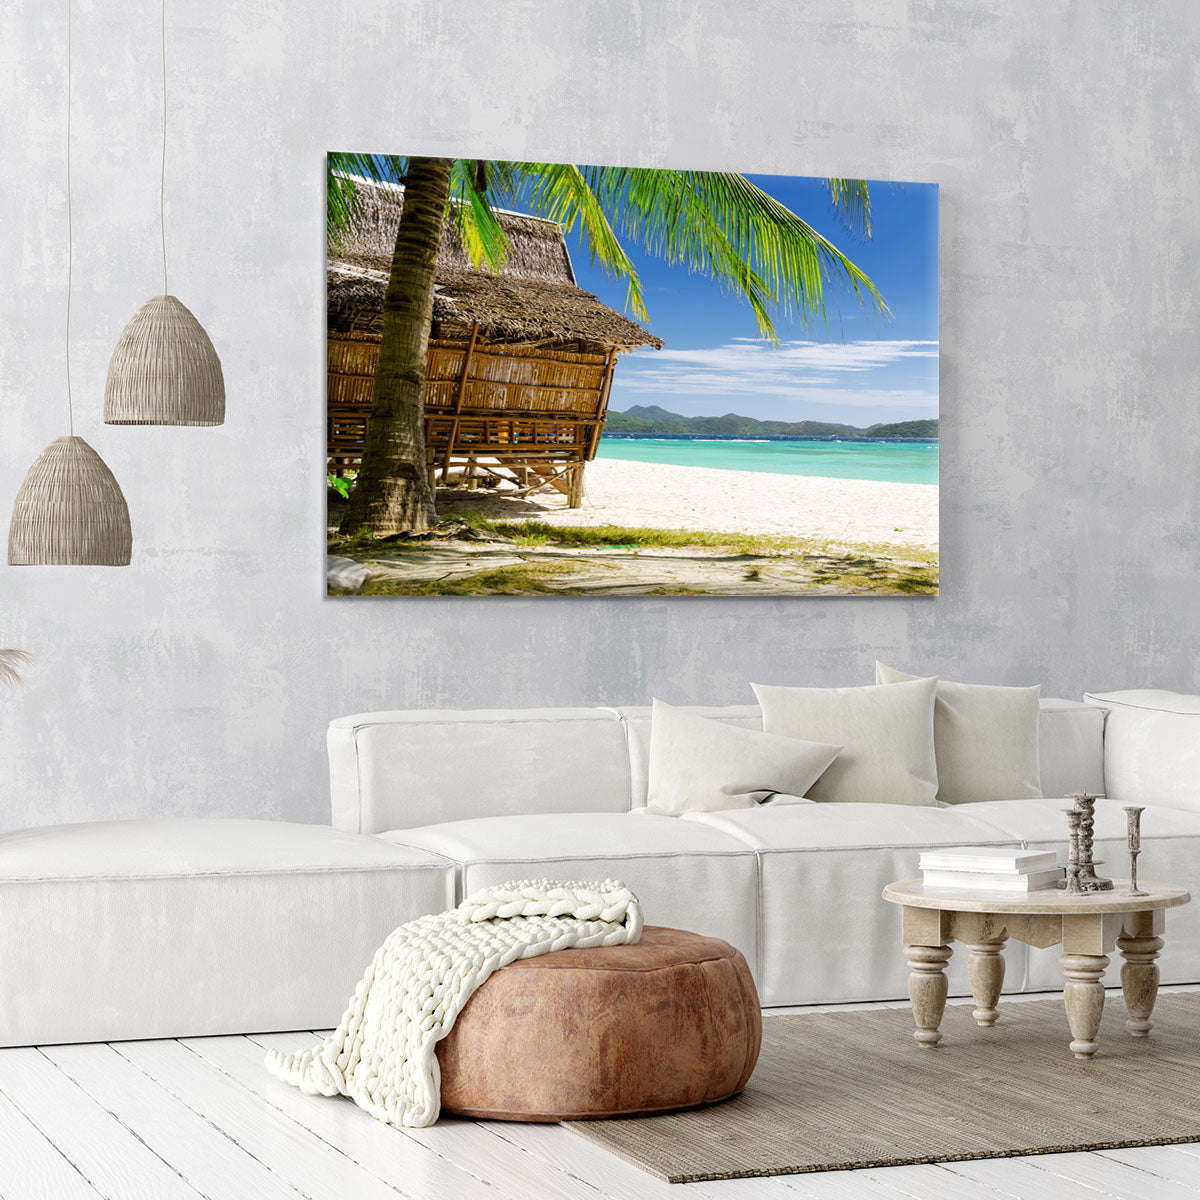 Bamboo hut on a tropical beach Canvas Print or Poster - Canvas Art Rocks - 6